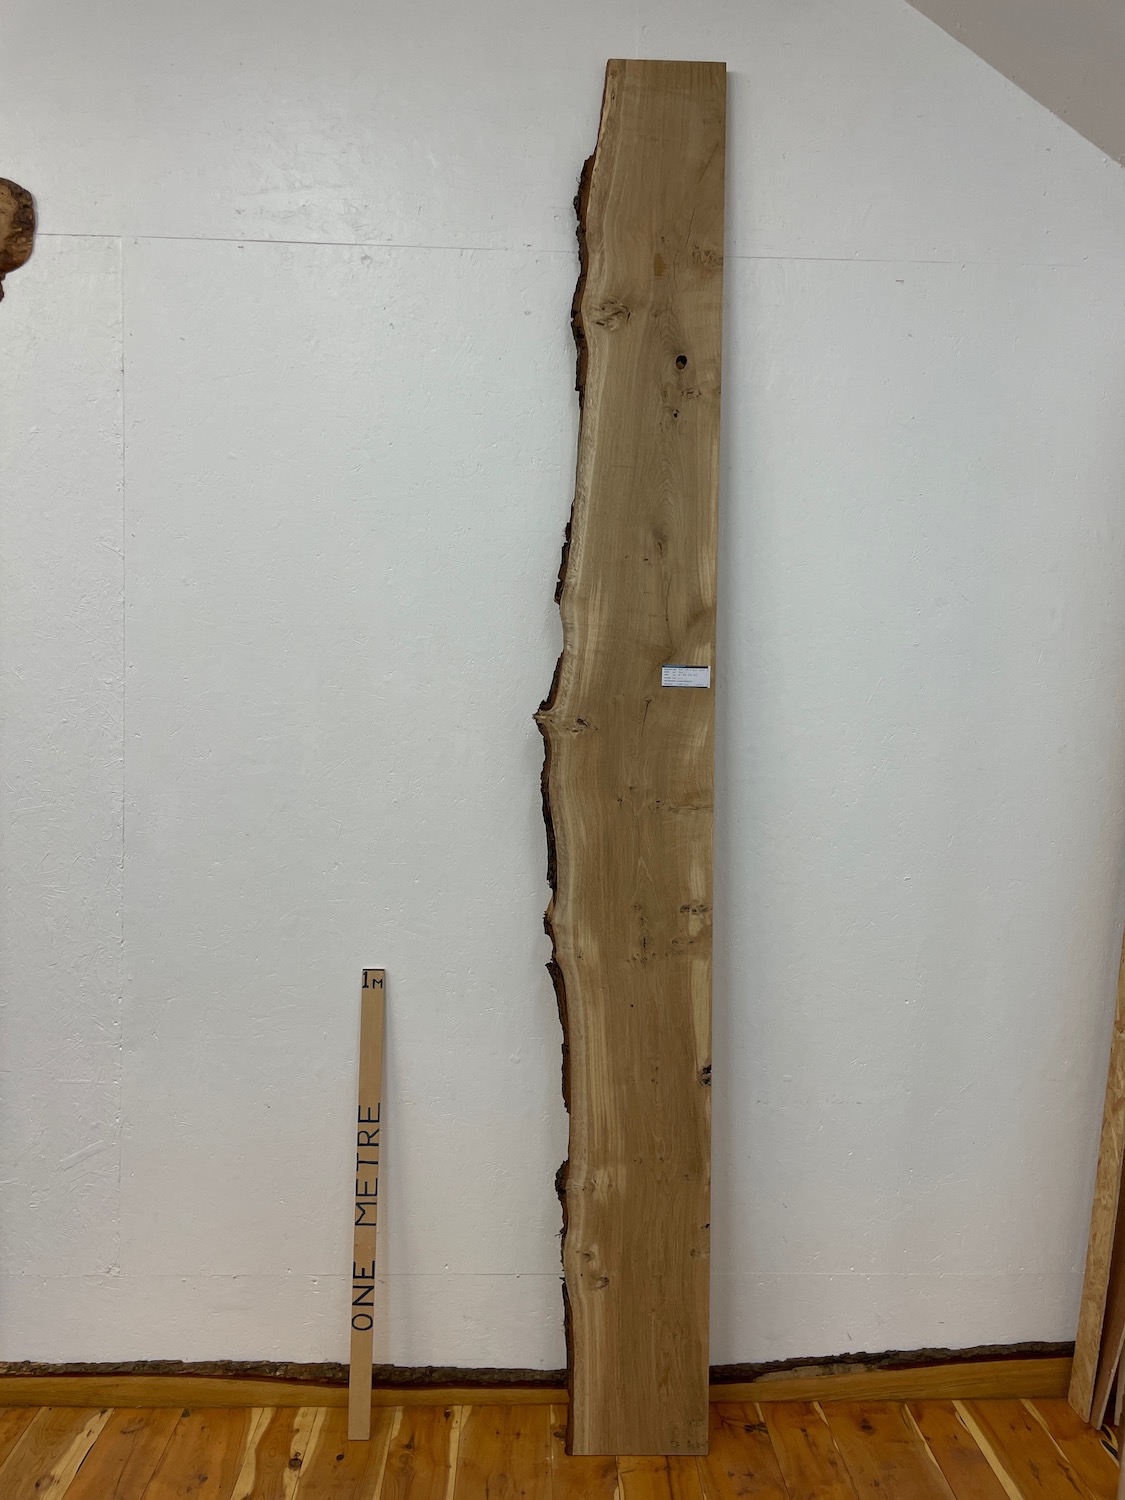 PIPPY OAK Single Waney Natural Edge Board 1560B-7 Thickness 2.7cm Kiln Dried Planed & Thicknessed Seasoned Hardwood Live Edge